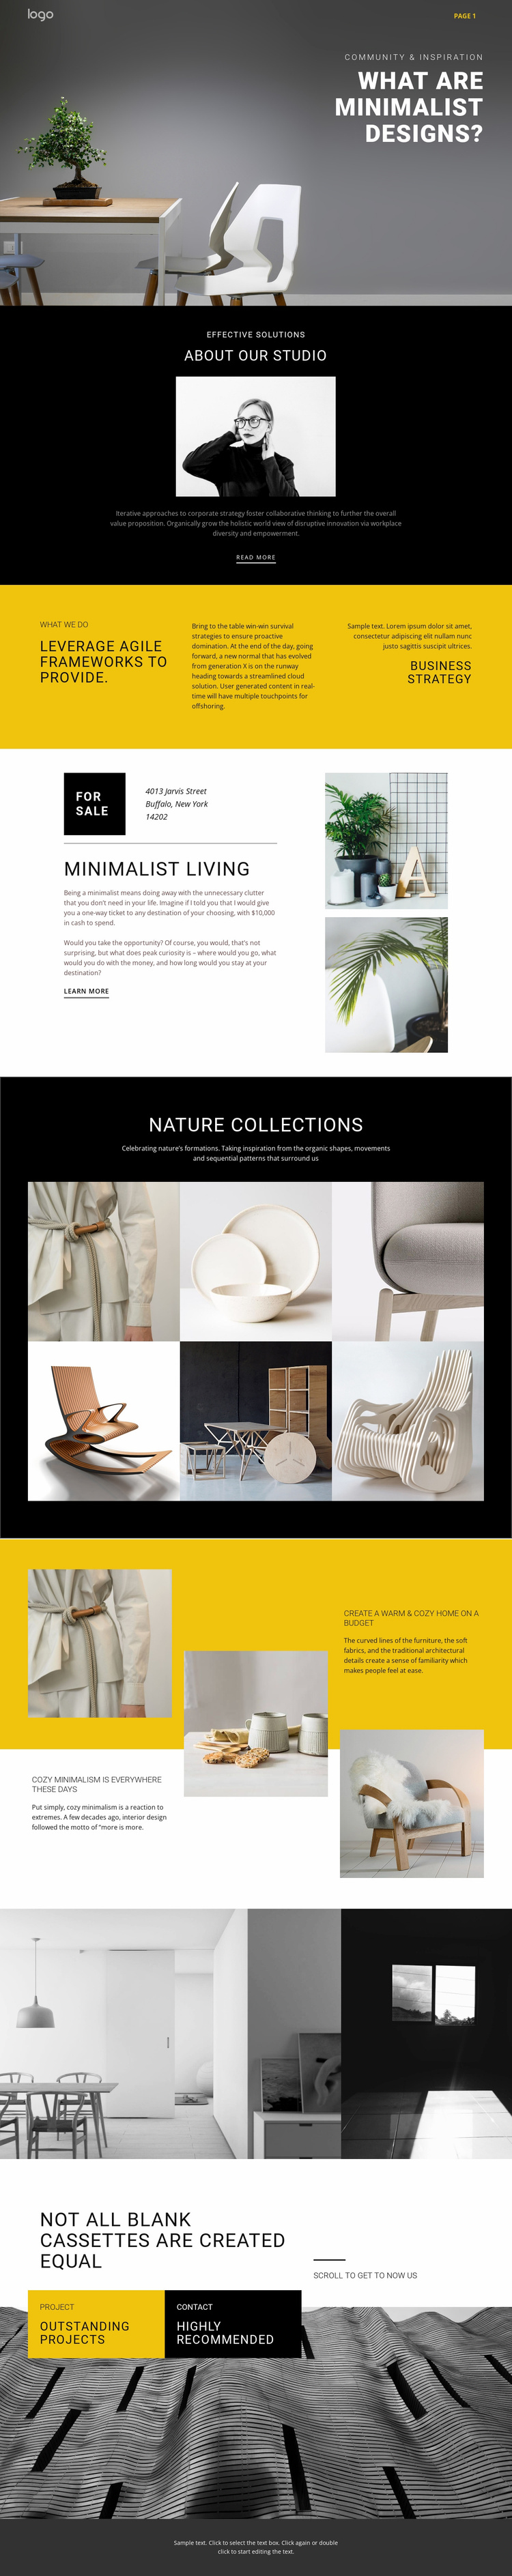 Minimalist designer interiors Website Template